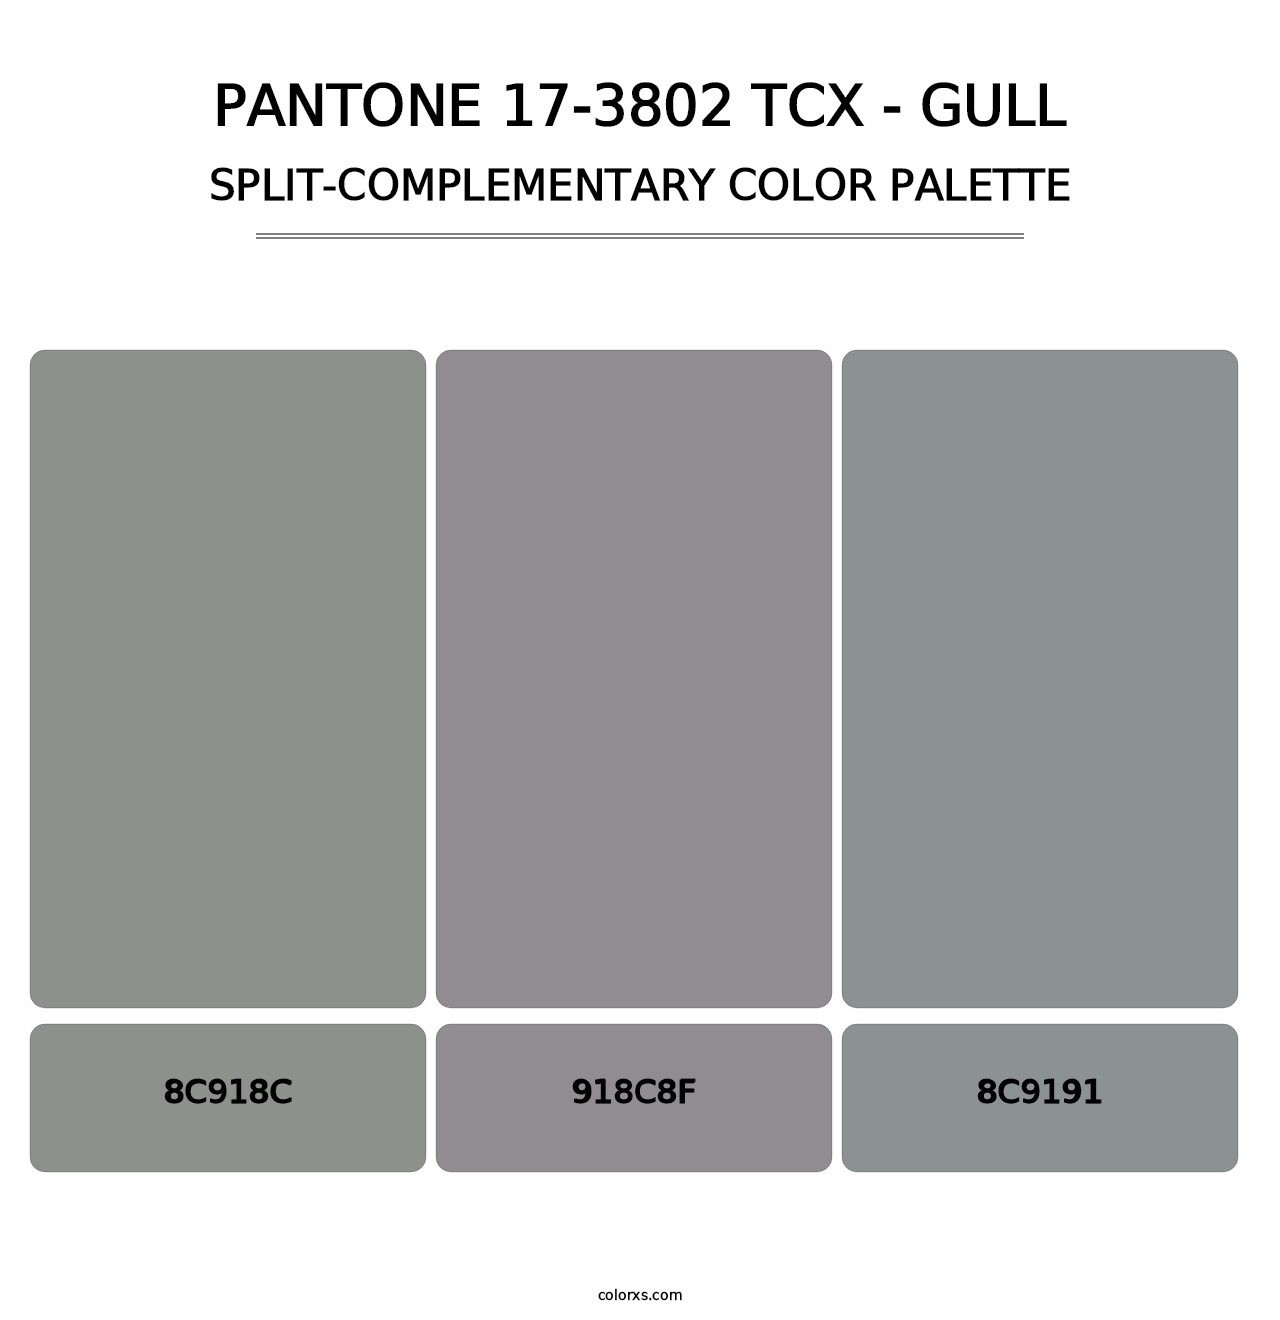 PANTONE 17-3802 TCX - Gull - Split-Complementary Color Palette